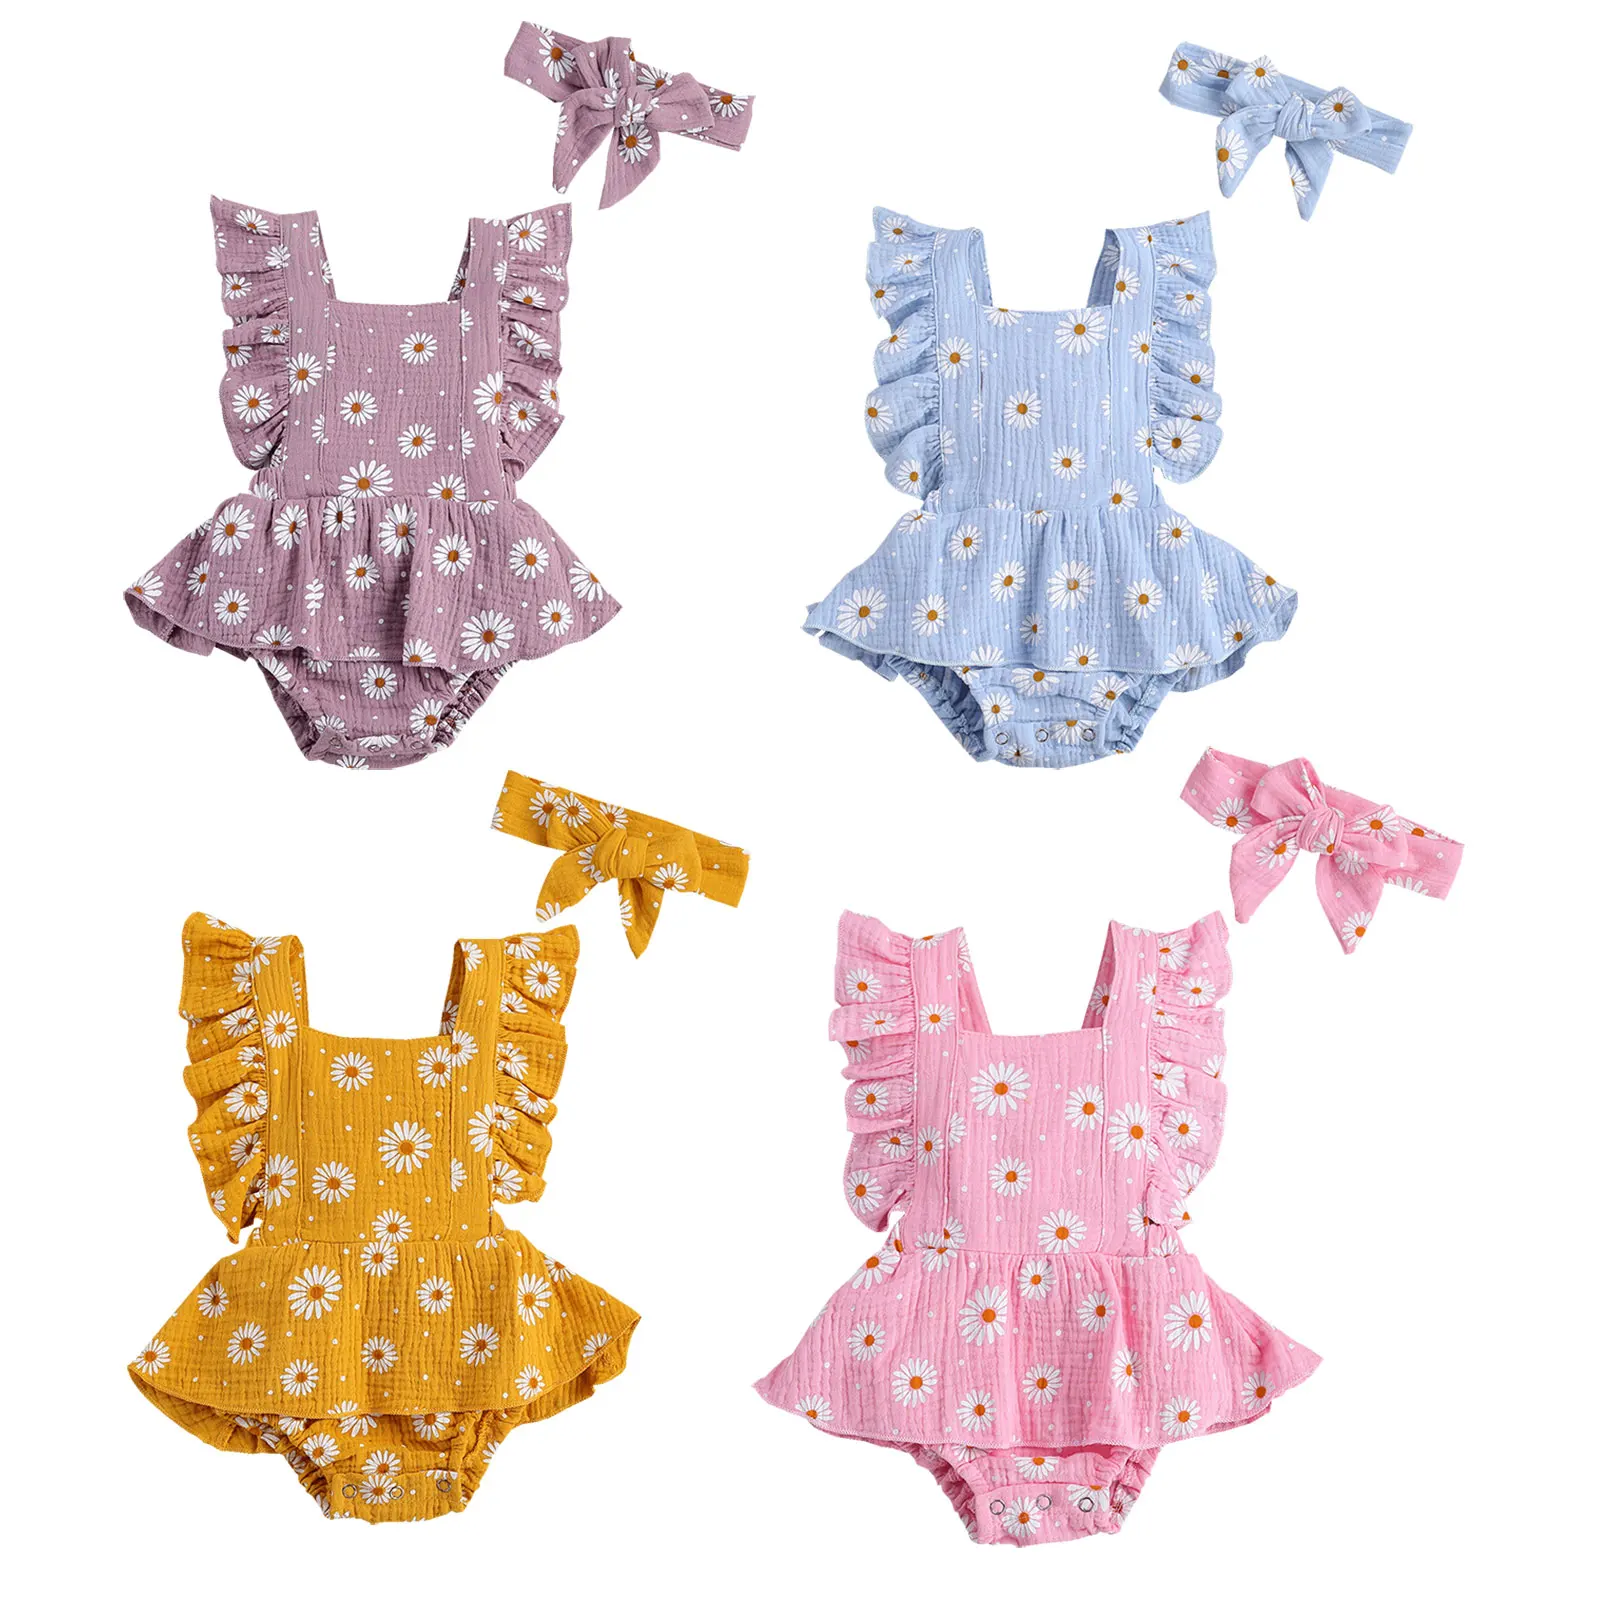 

Toddler Girls Romper Floral Top Summer Sleeveless Pleated Crotch Buttons Skirt Flouncing Bowknot Headband for 0-24Months